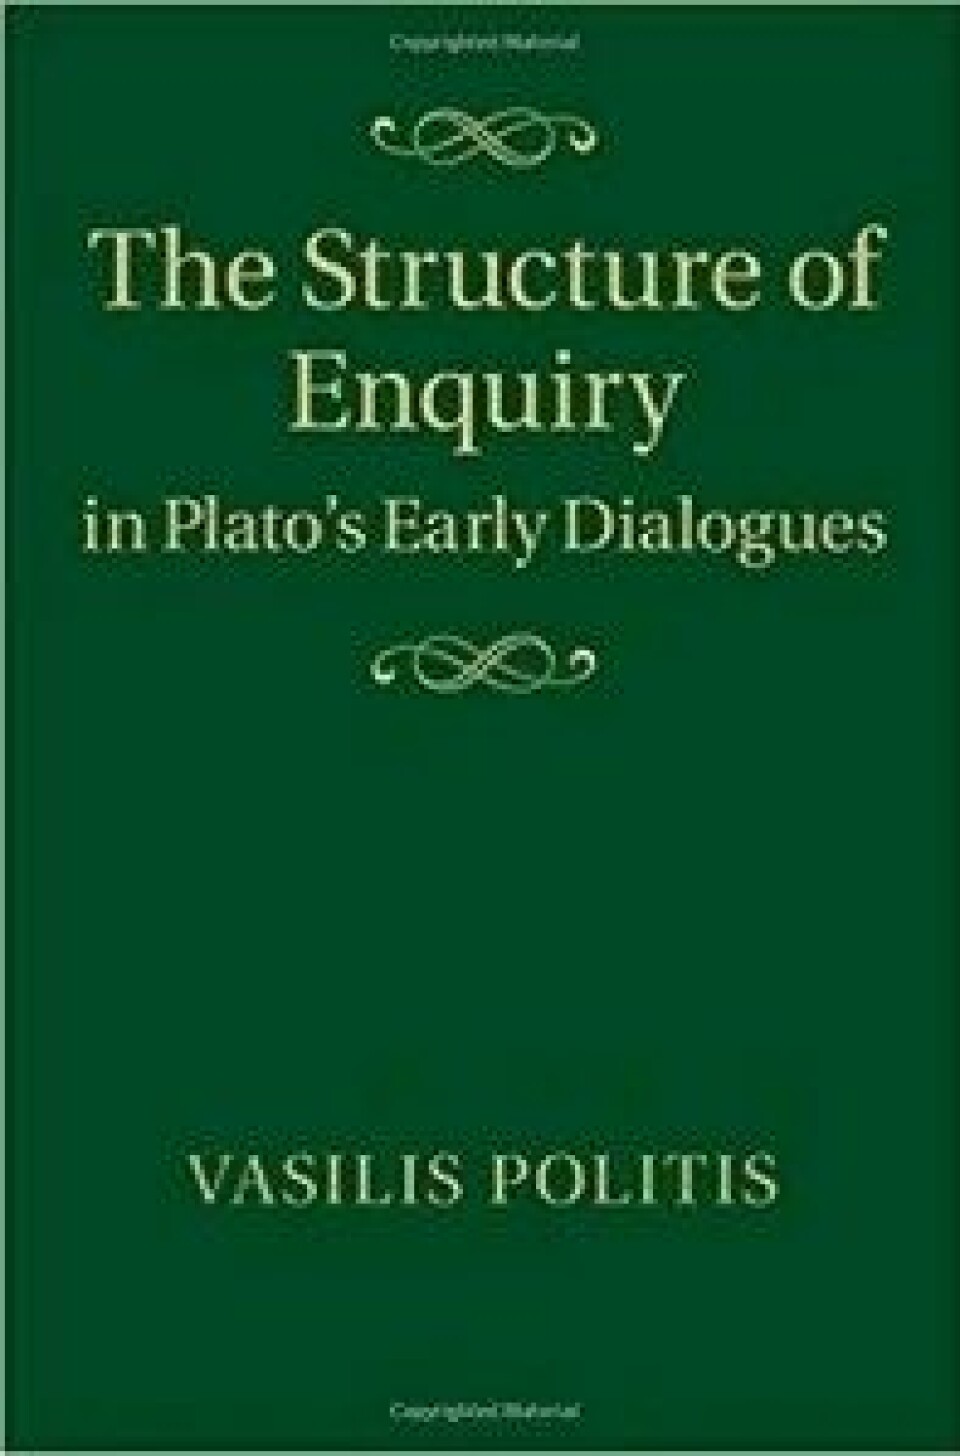 The structure of Enquiry in Plato’s Early Dialogues av Vasilis Politis. Cambridge University Press, 2015.